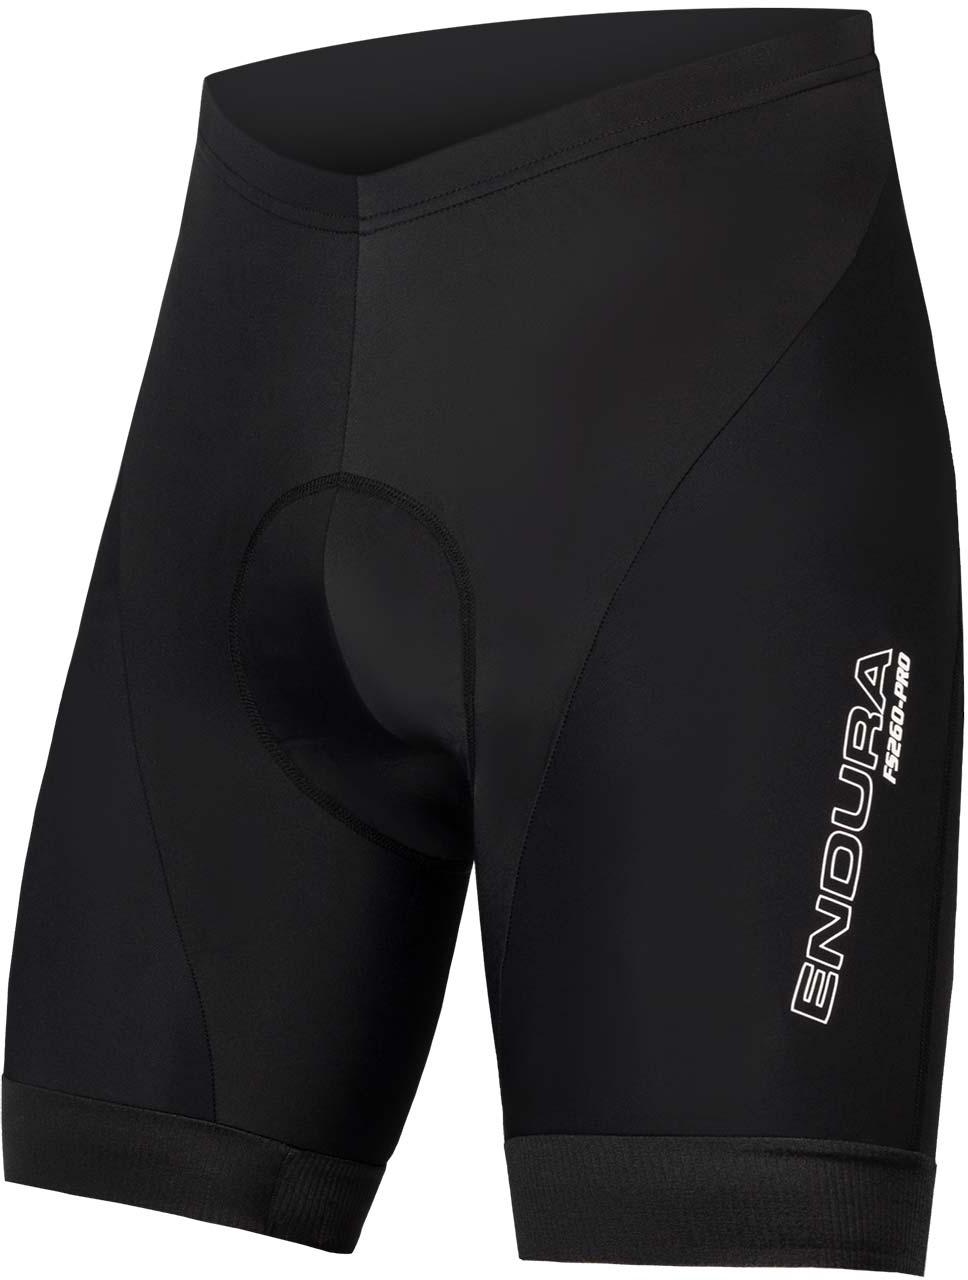 Endura FS260-Pro Thermo Tights | bike pants